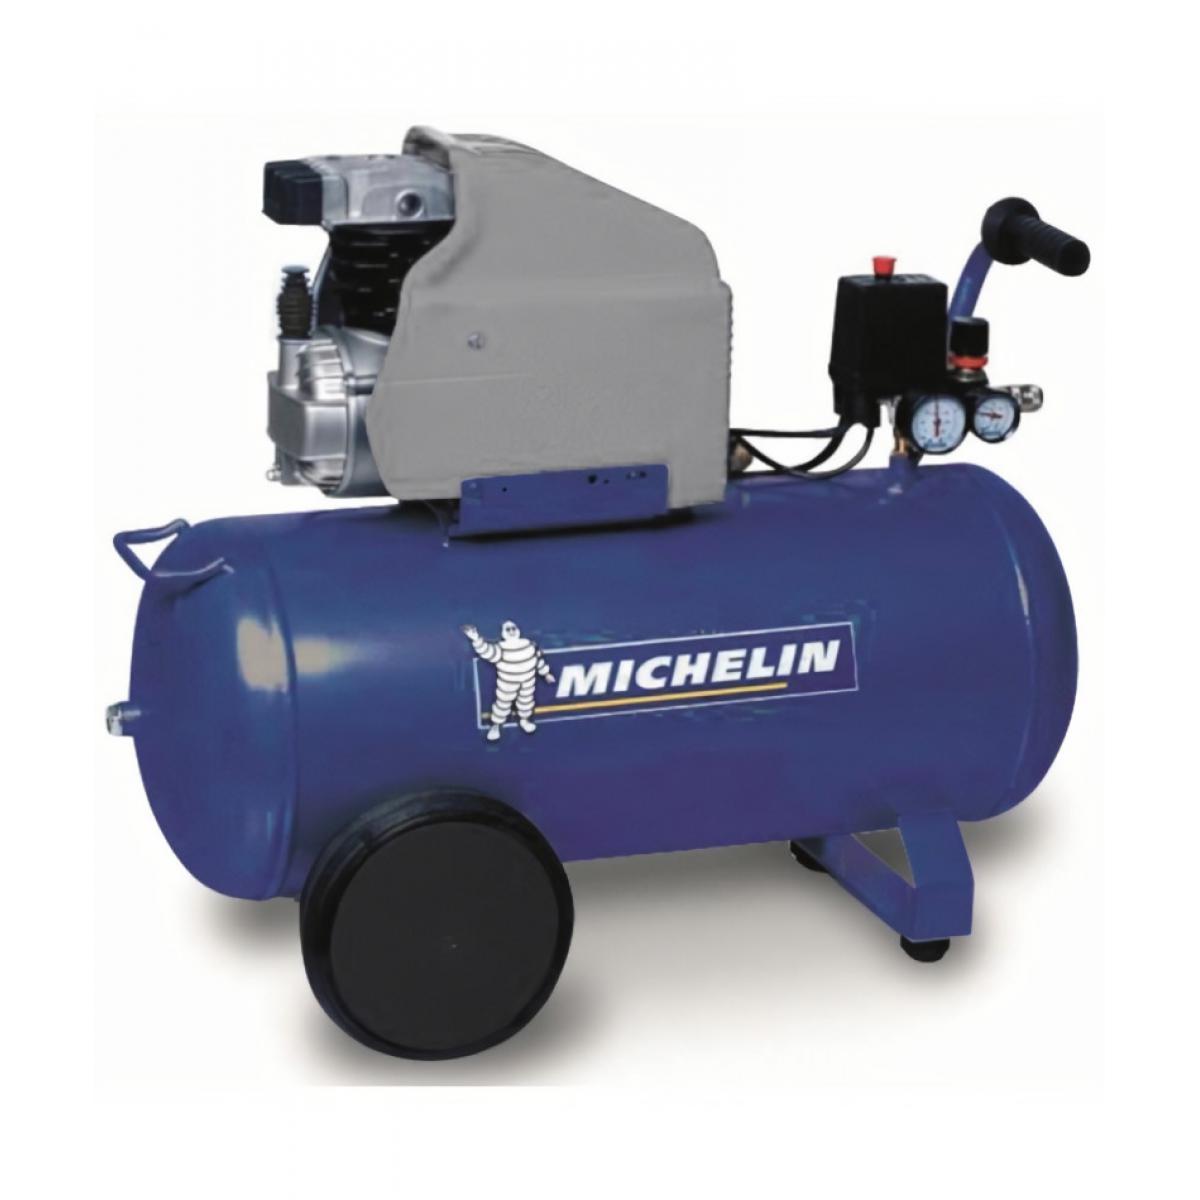 Michelin - MICHELIN MB50 Compresseur avec Cuve 50 Litres 2 cv - Compresseurs